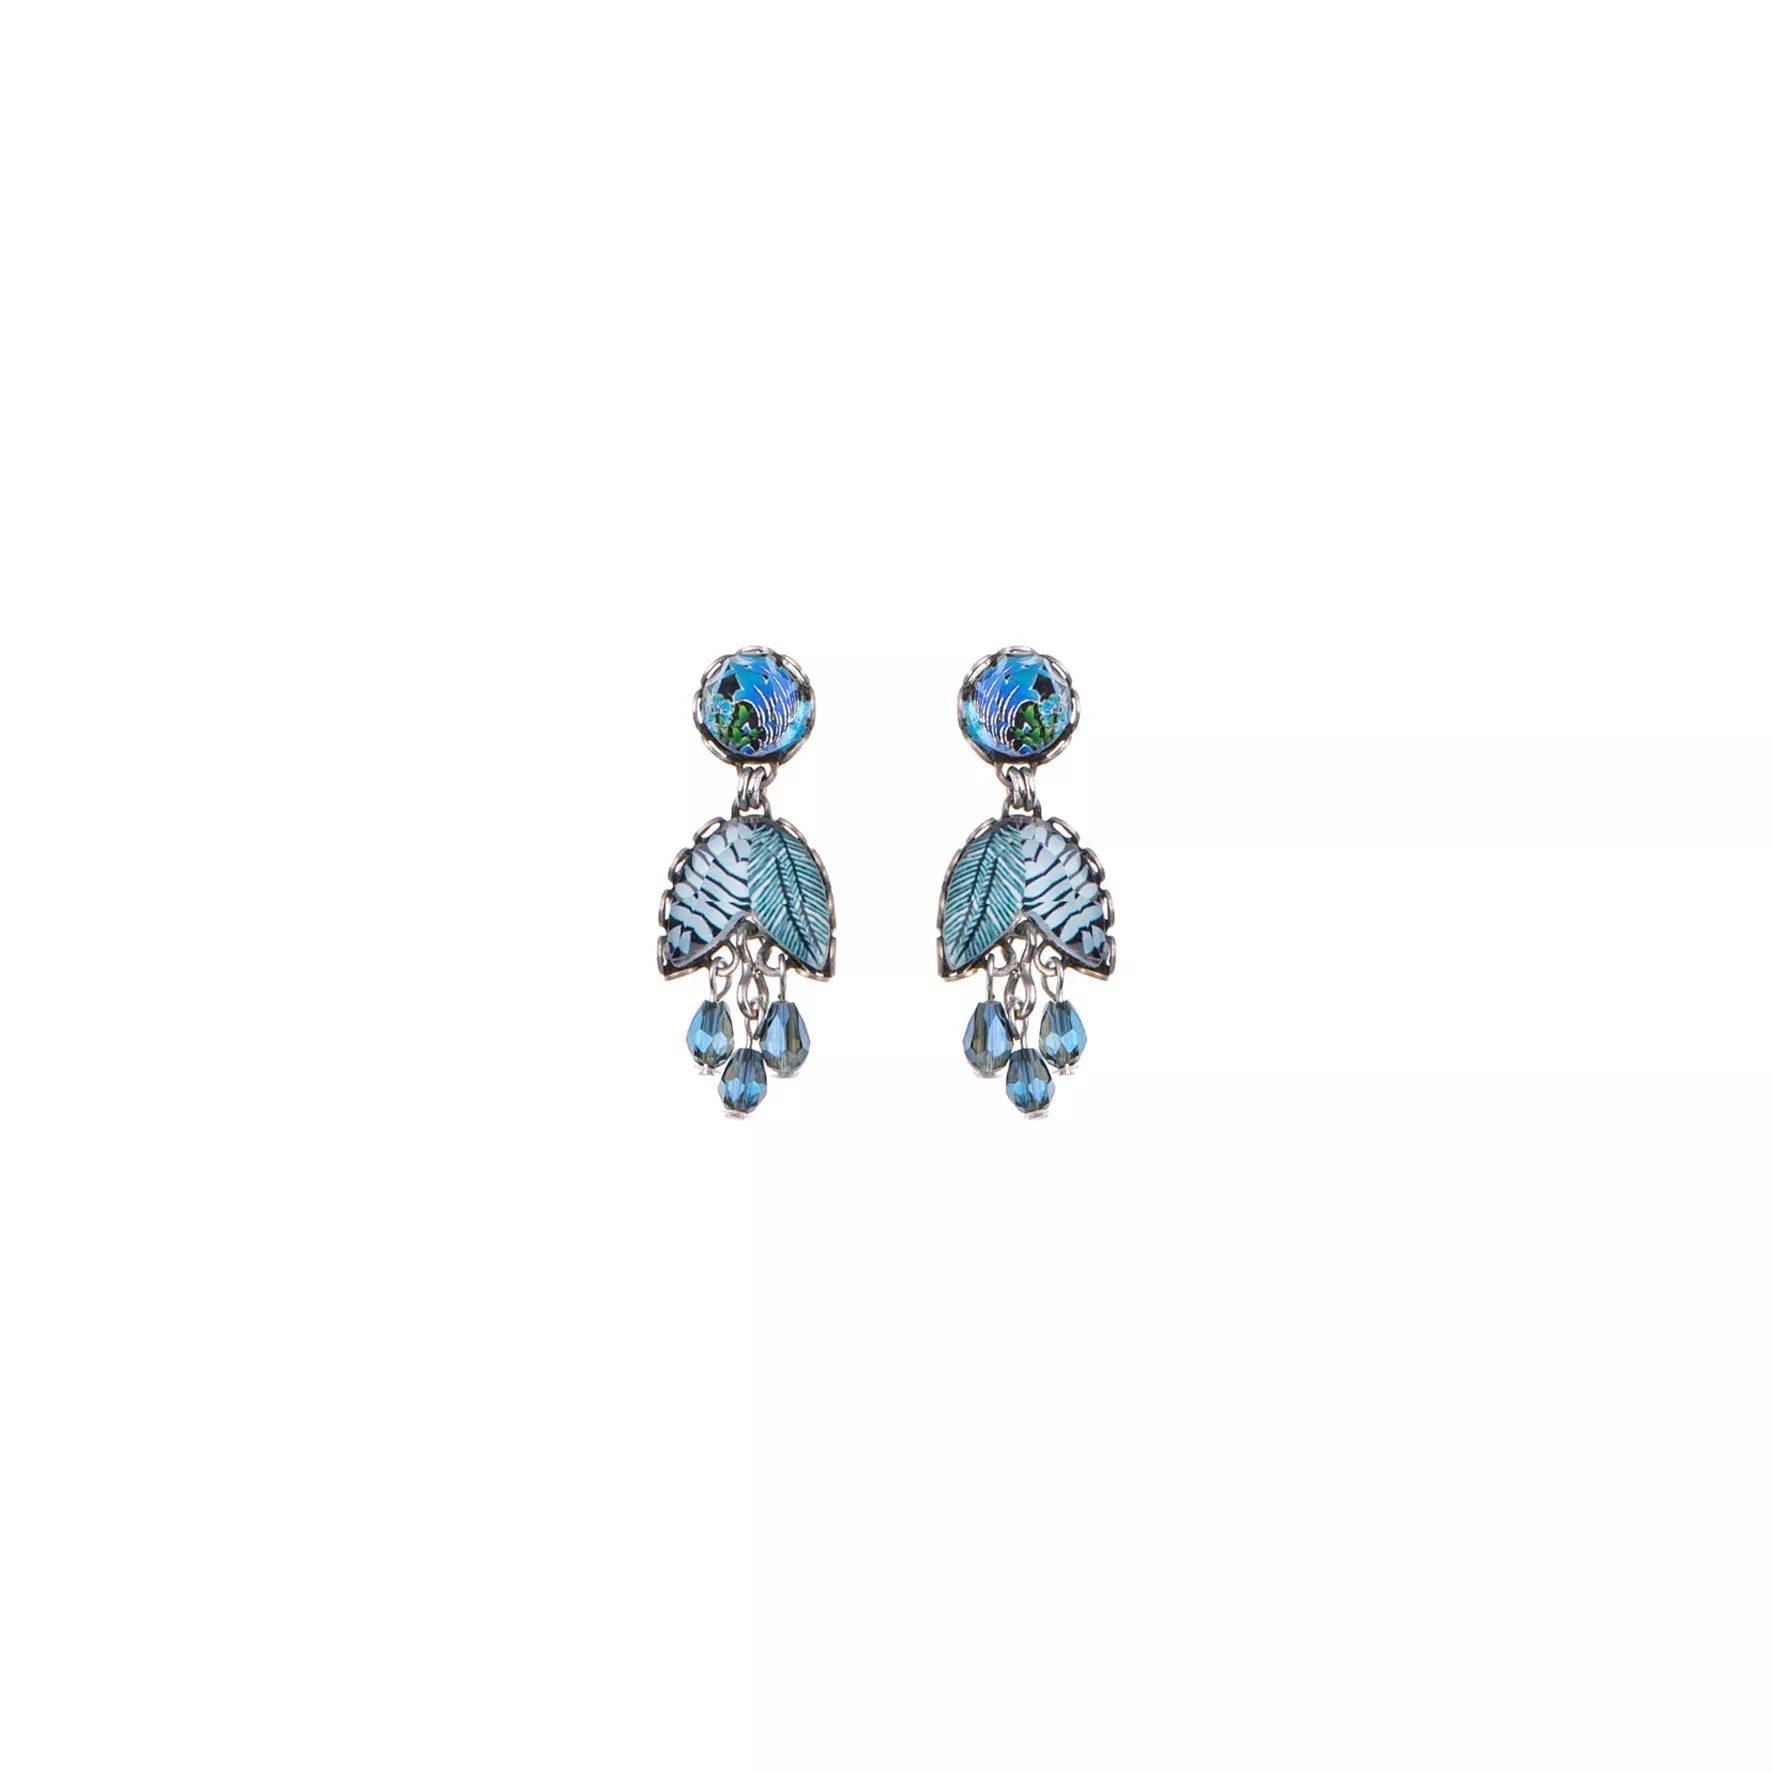 Deep Sea Nerida Earrings - The Nancy Smillie Shop - Art, Jewellery & Designer Gifts Glasgow